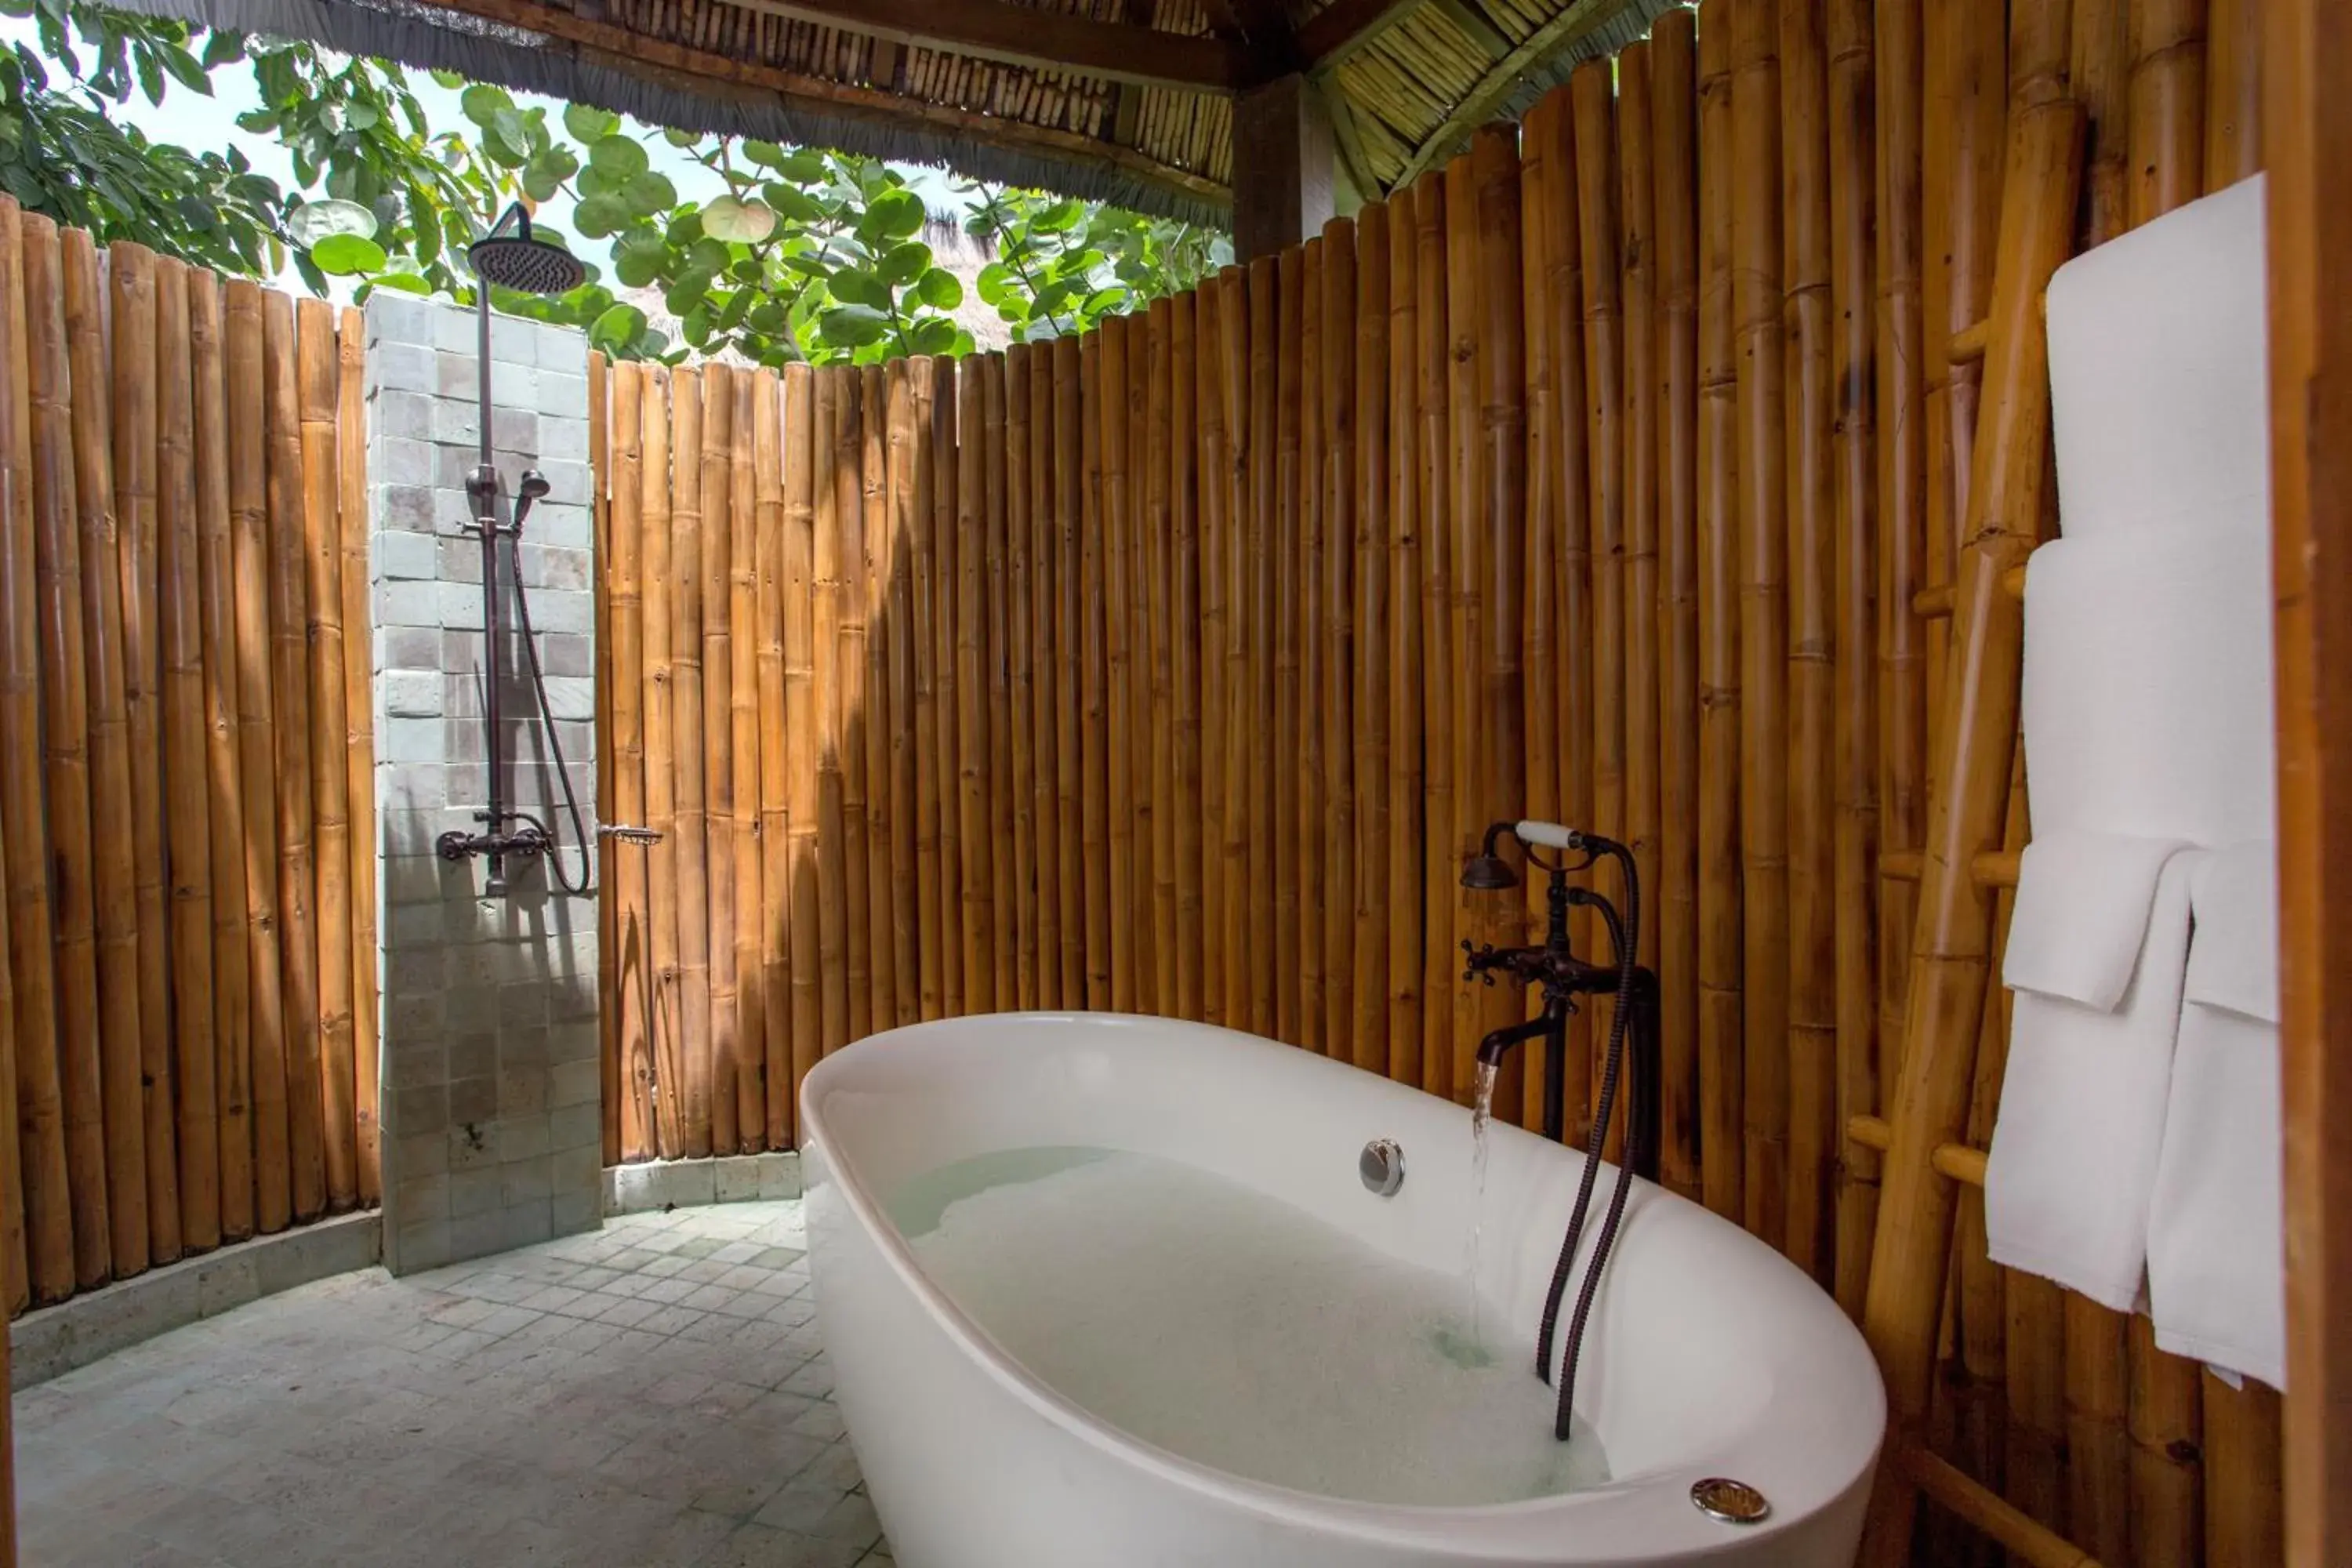 Bathroom in U Pattaya